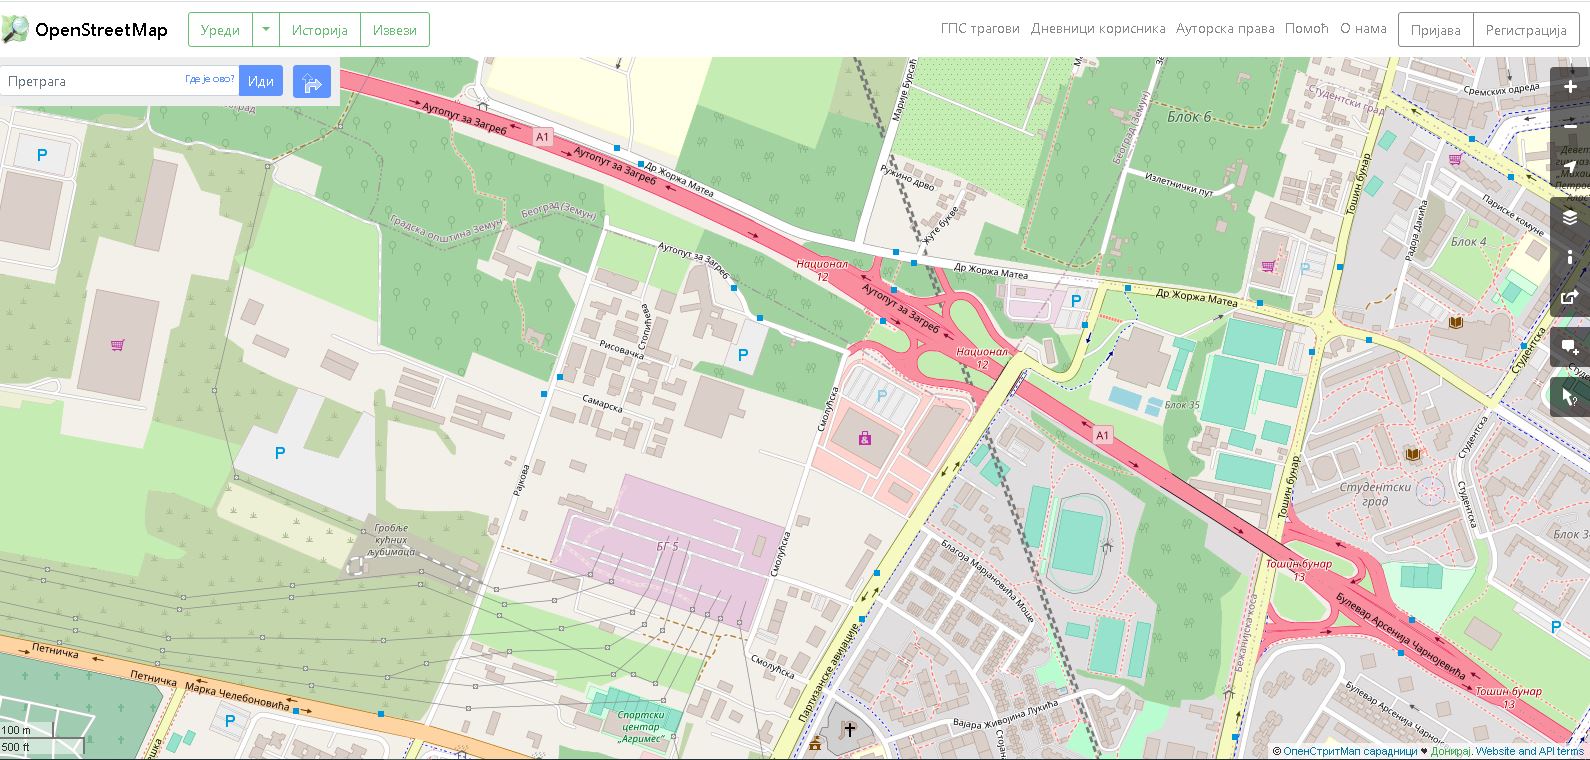 ауто-пут кроз београд_опен стрит мап.JPG